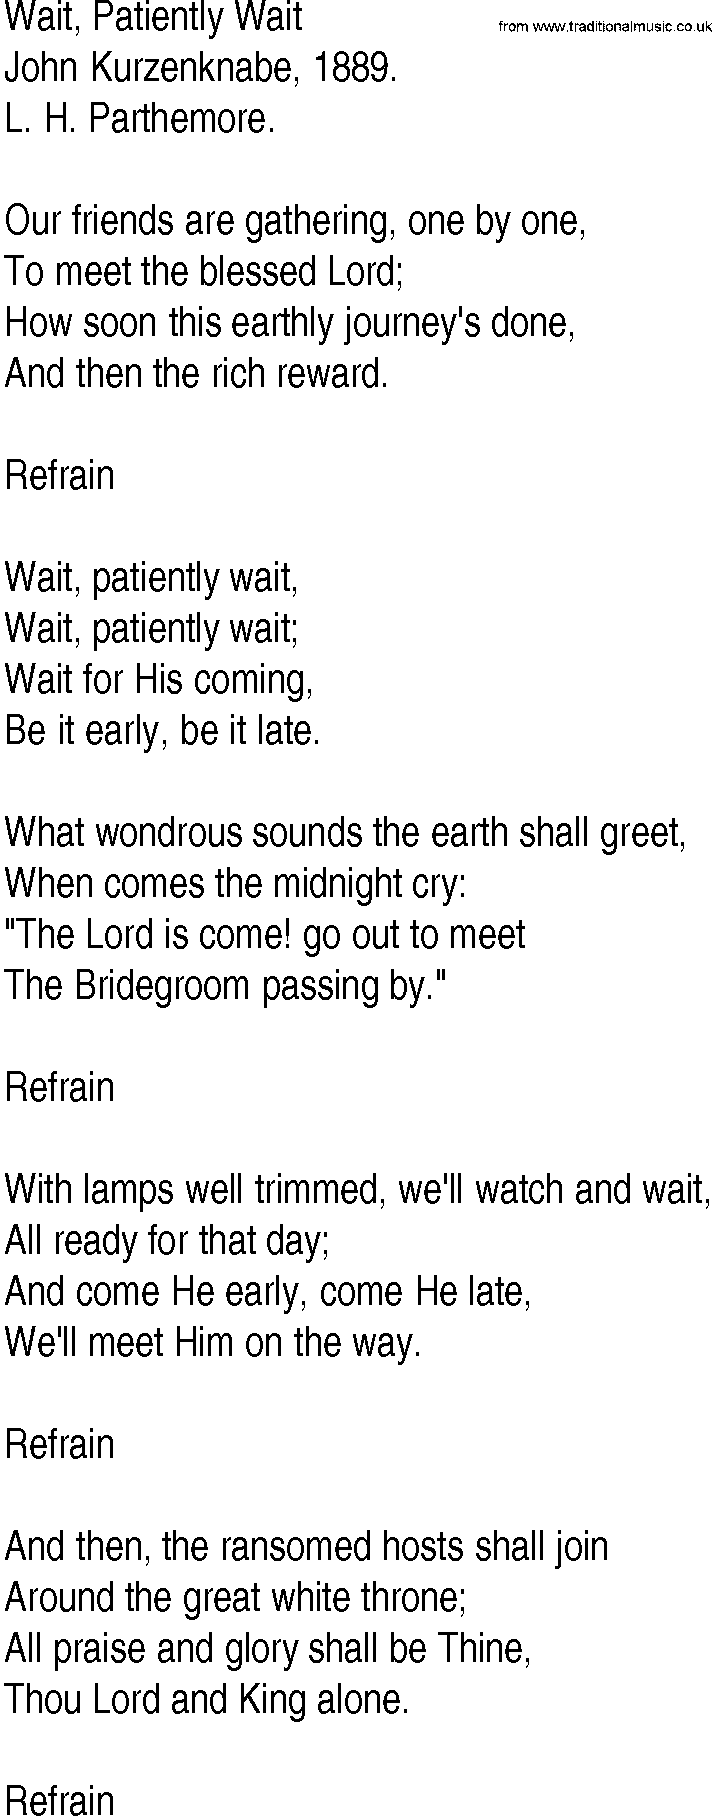 Hymn and Gospel Song: Wait, Patiently Wait by John Kurzenknabe lyrics